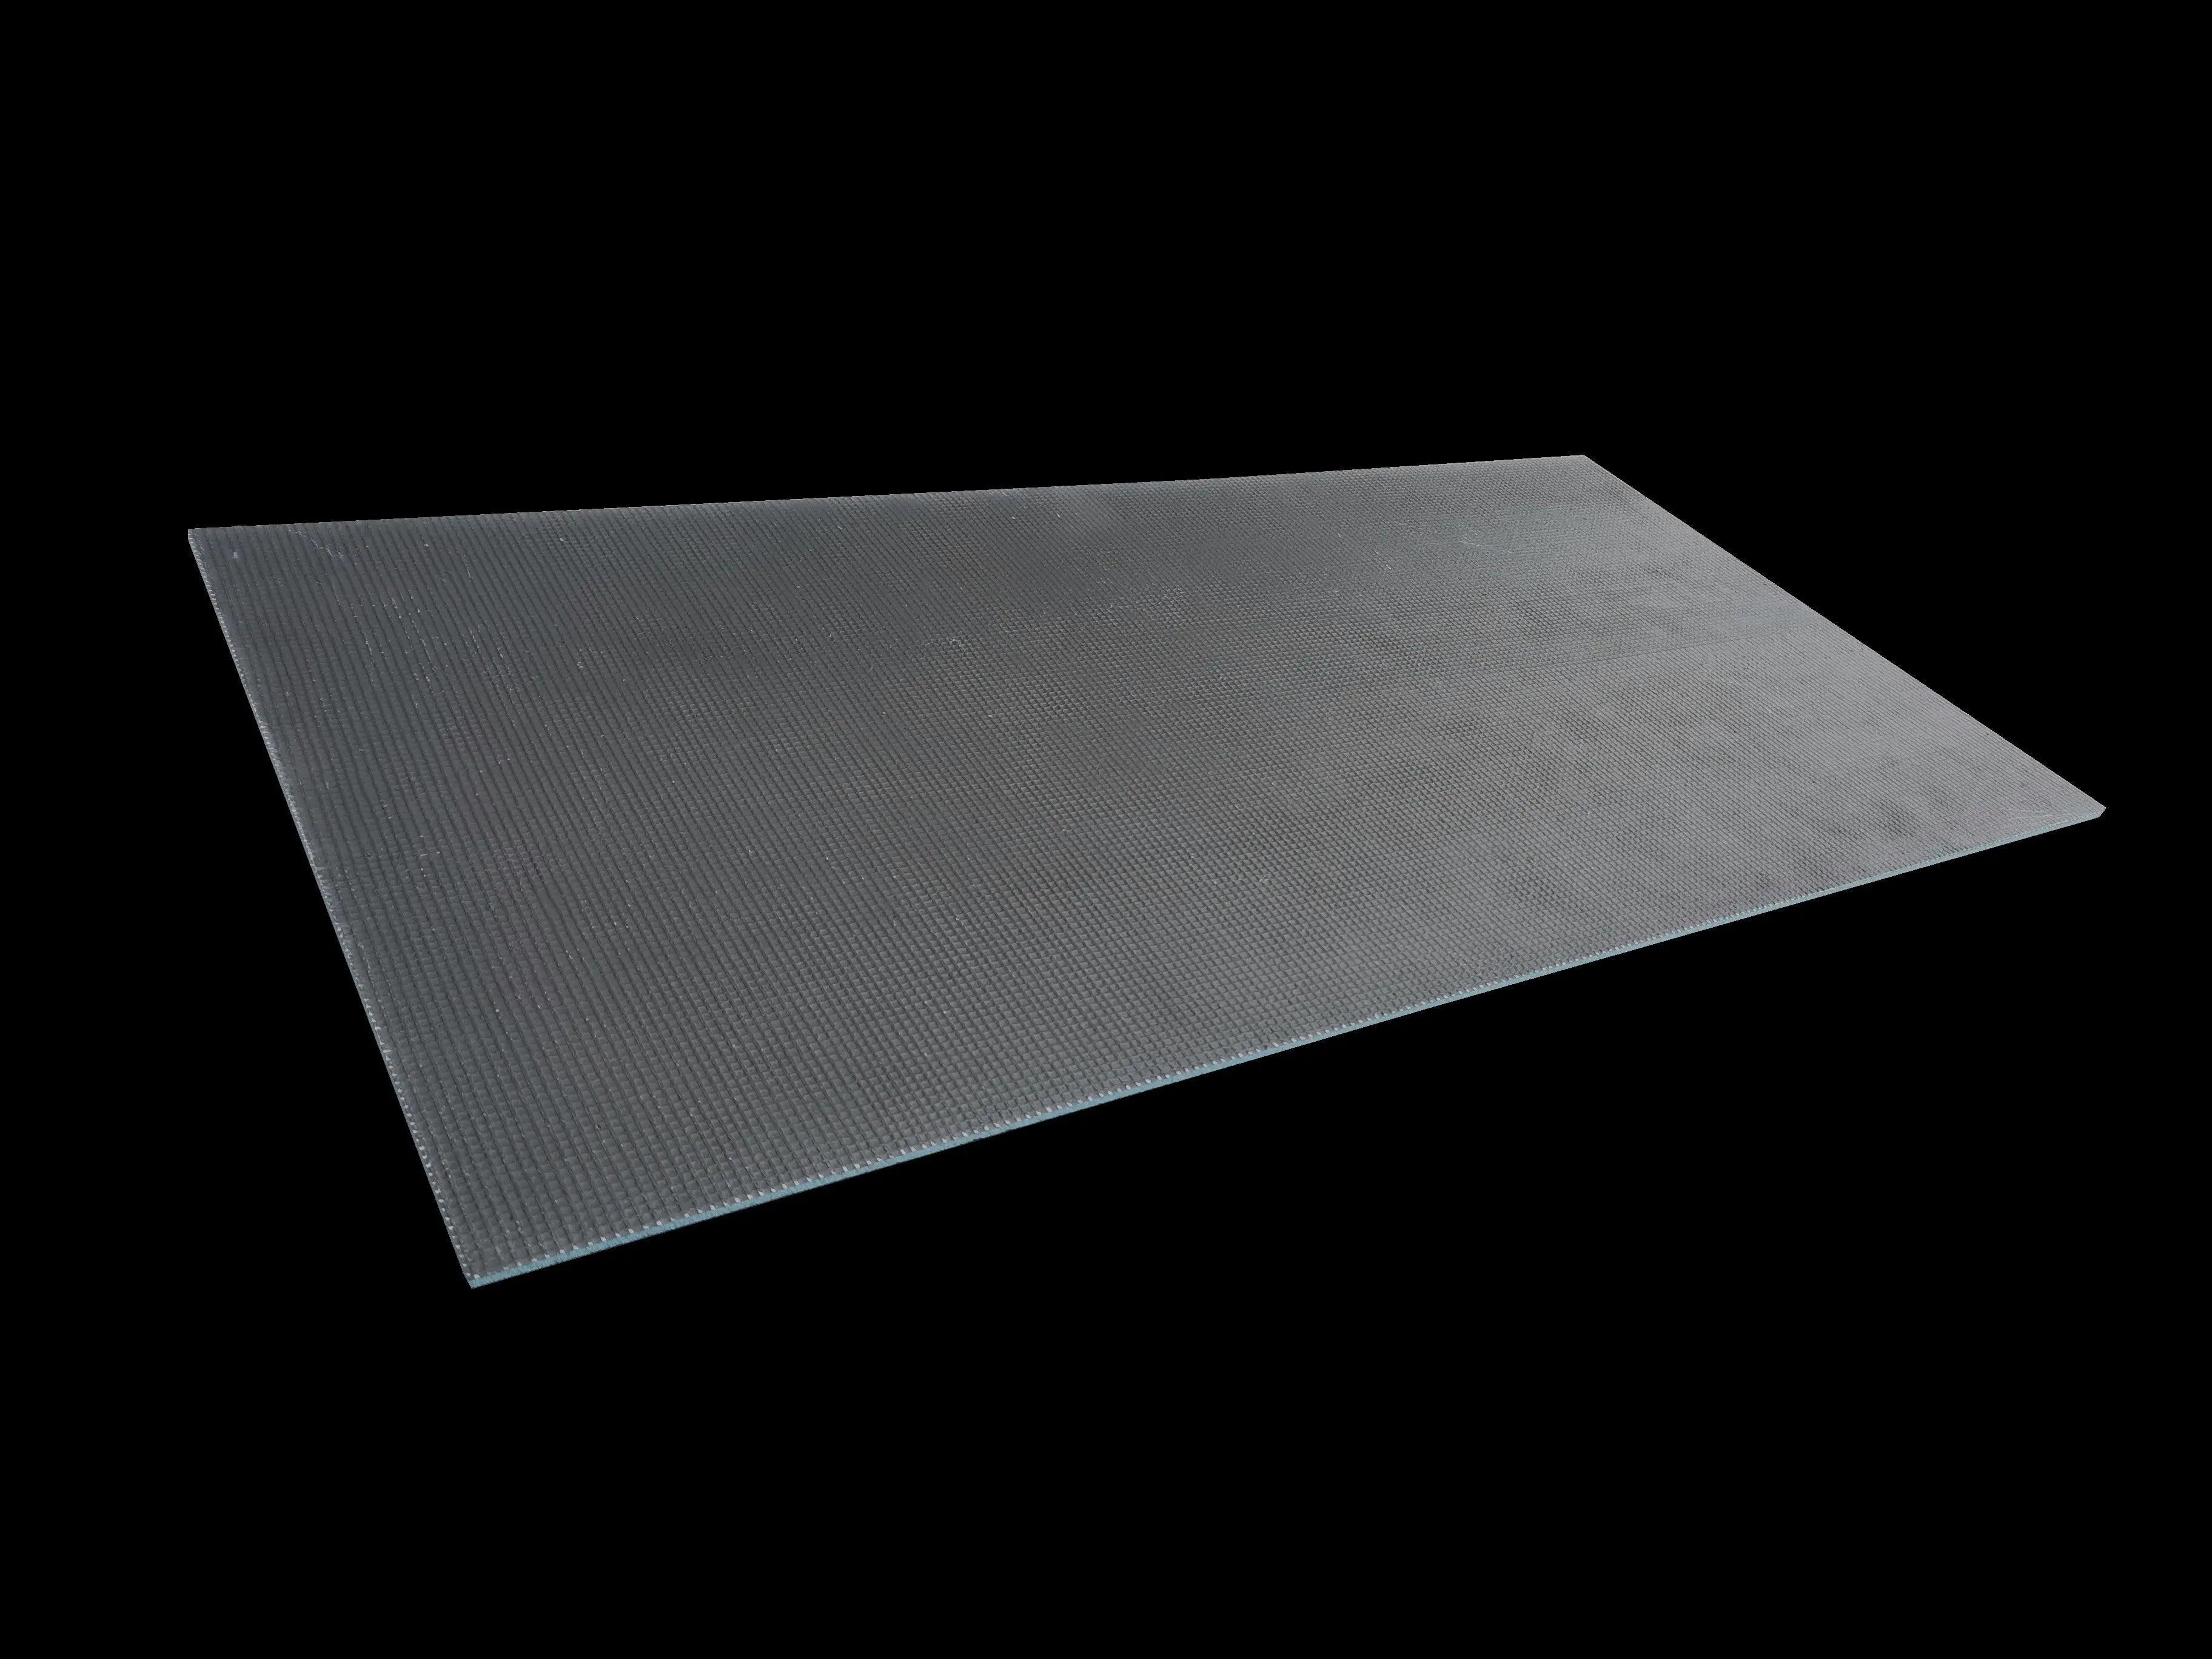 Tile Backer Insulation Board 6MM: 1200mm x 600mm - Box of 6 Deals499